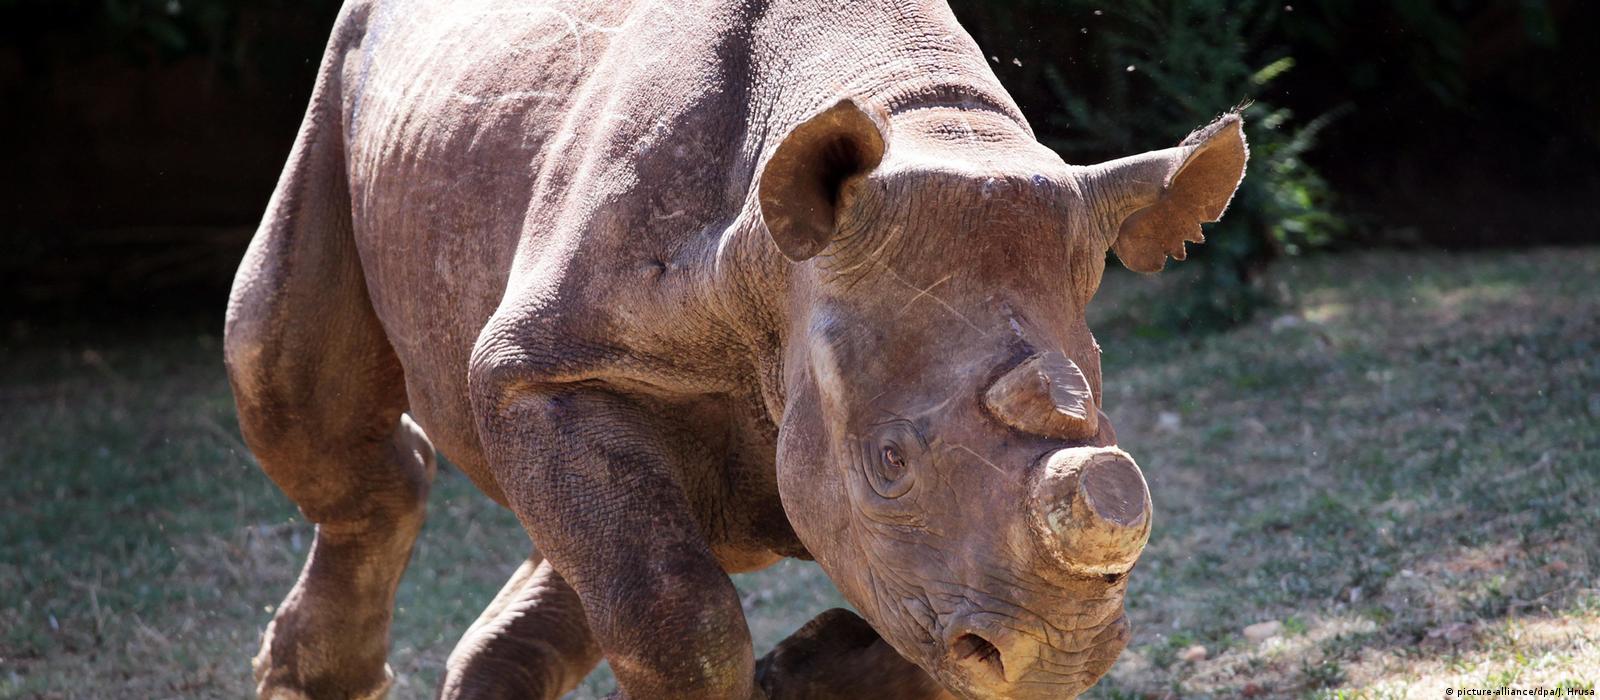 Drastic steps to protect captive rhinos – DW – 03/24/2017